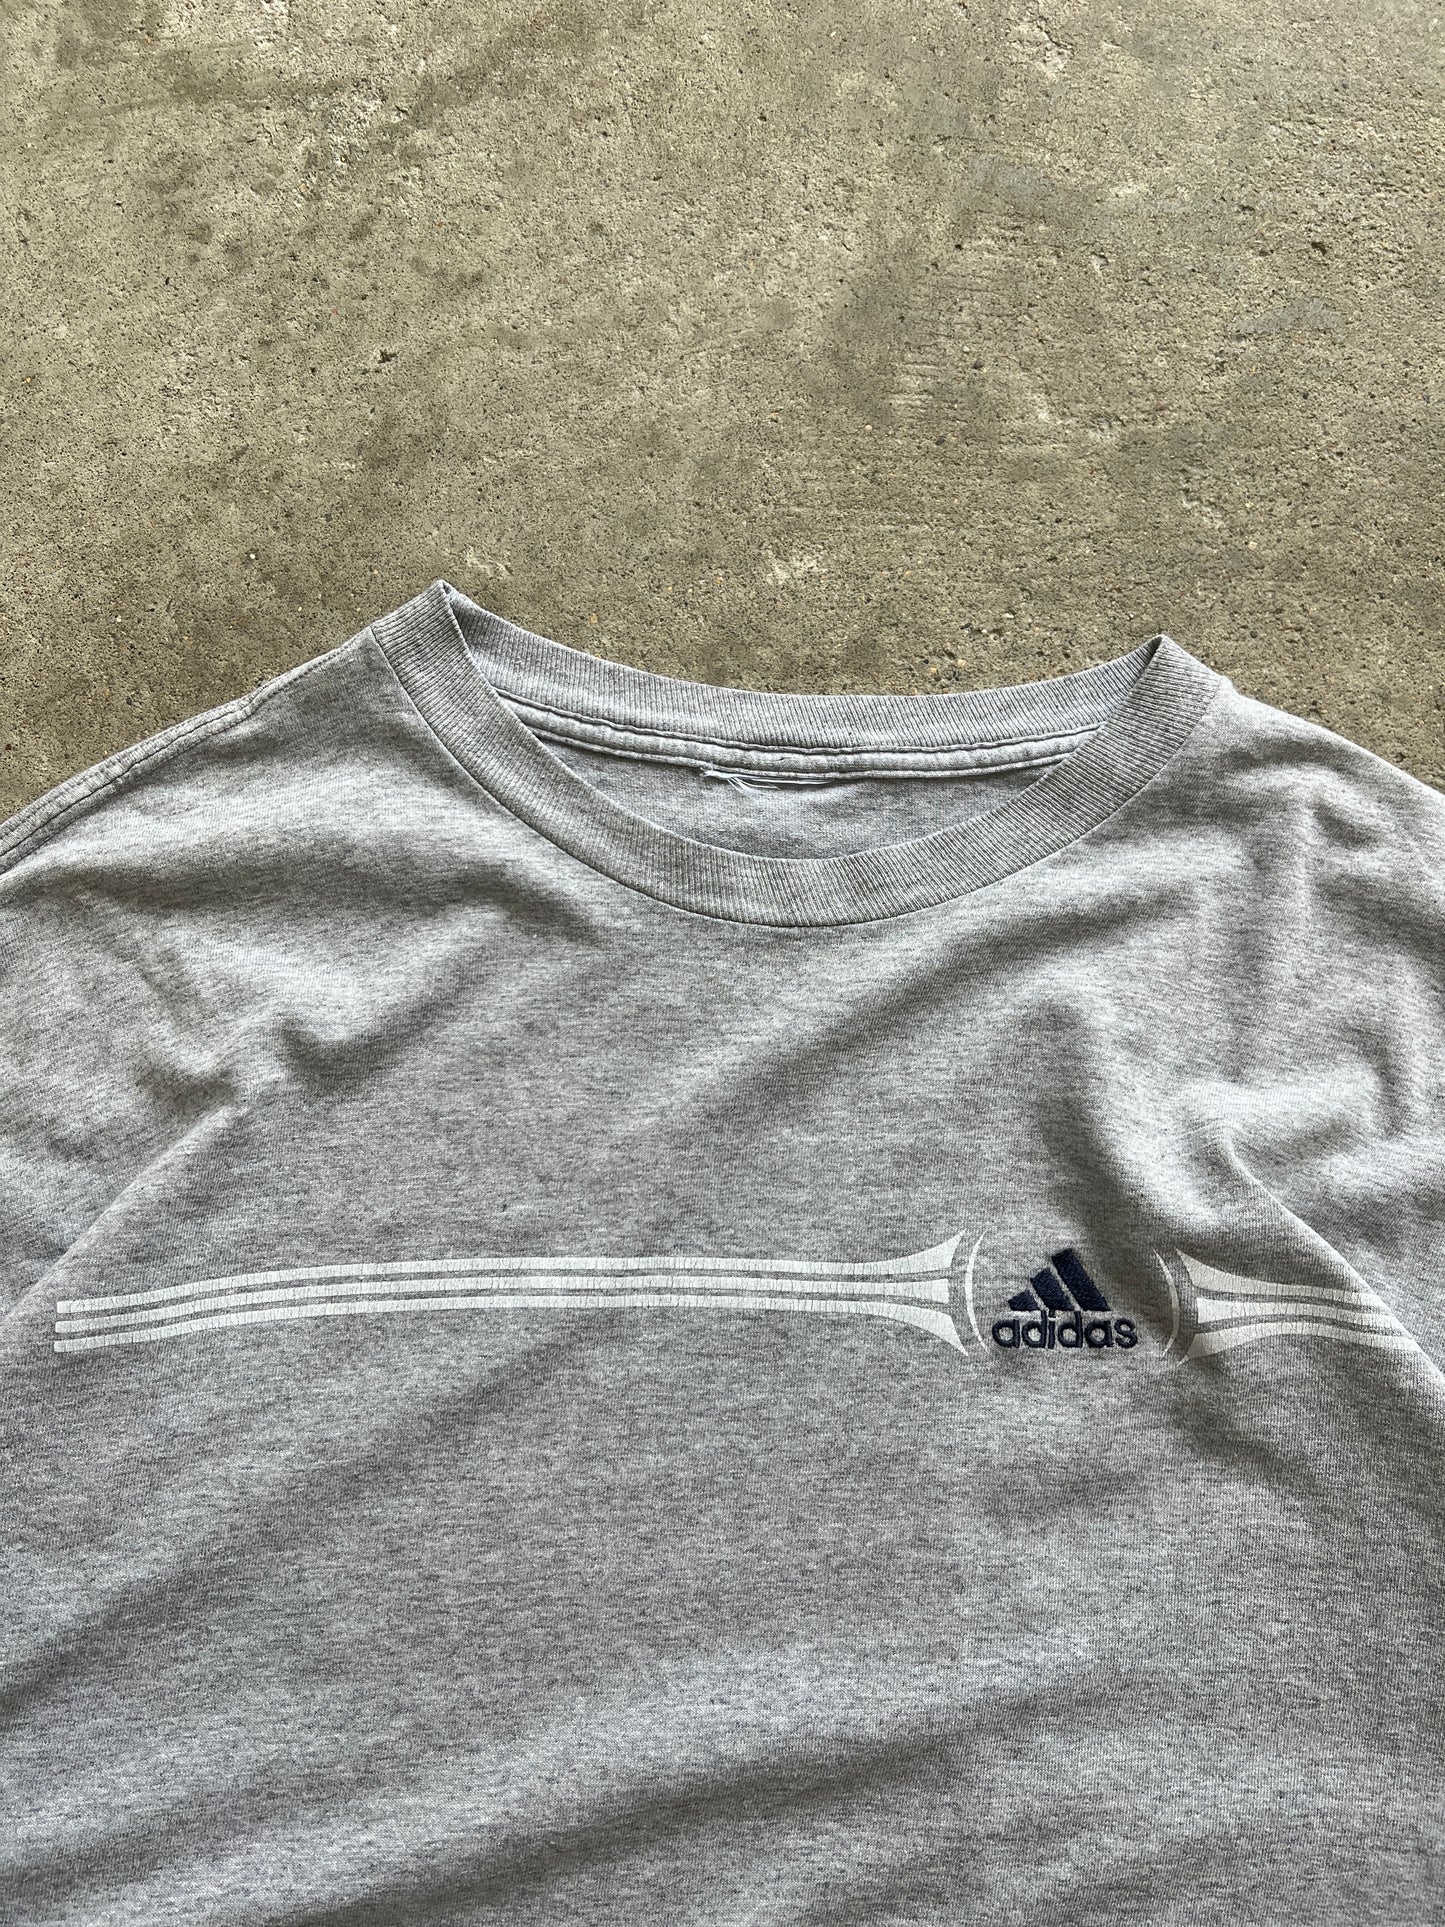 Vintage Embroidered Adidas Shirt - XL